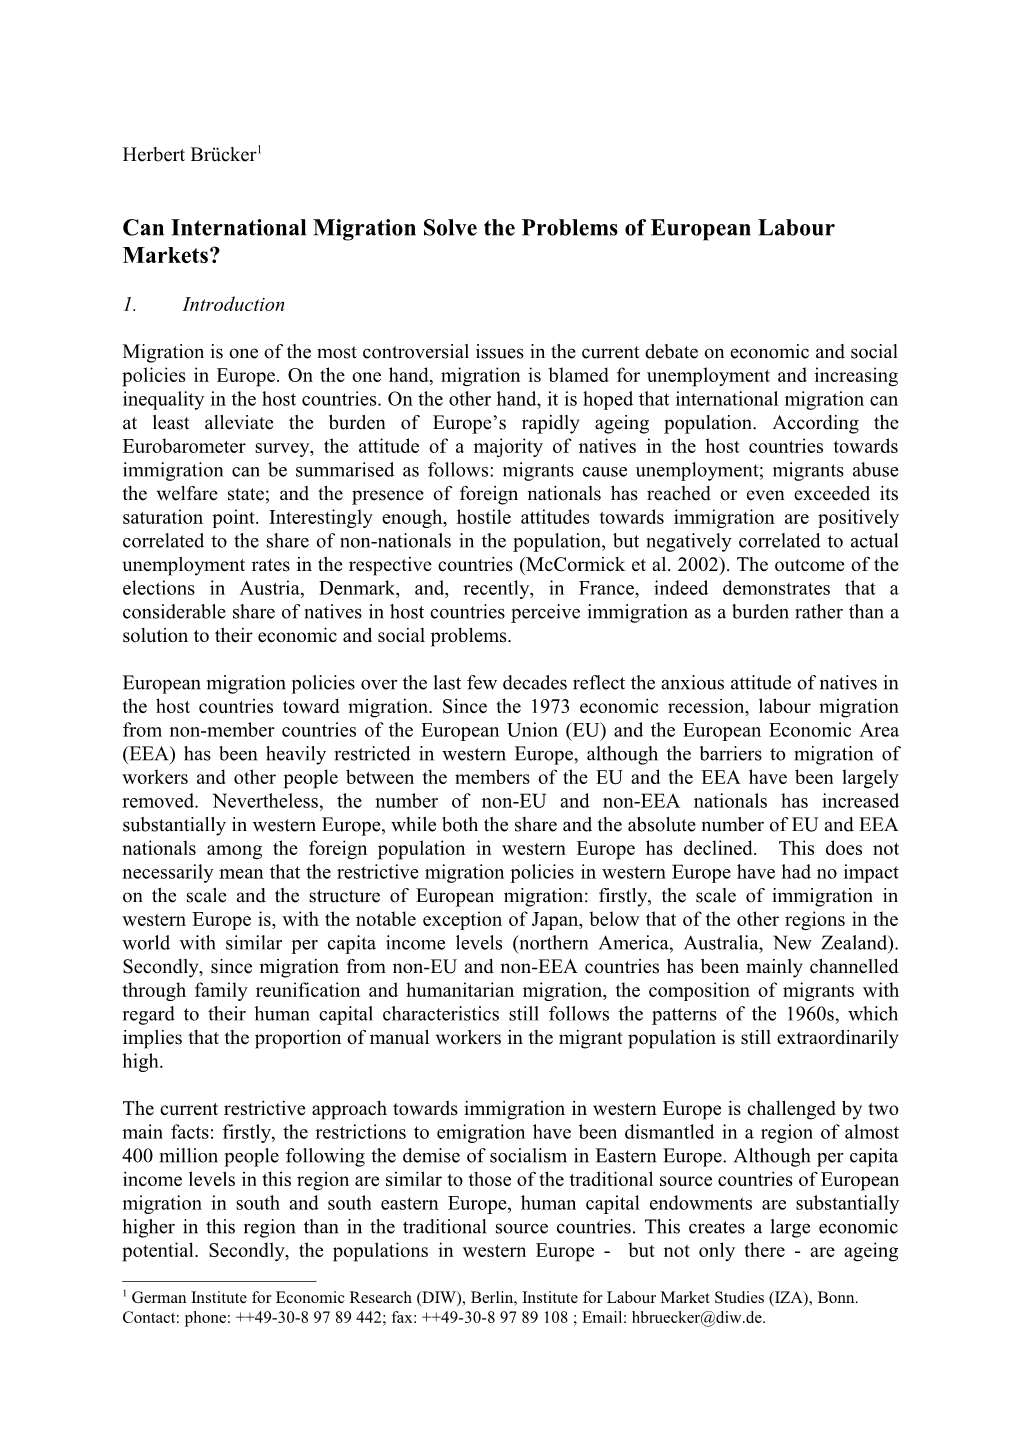 Migration and the European Labour Market